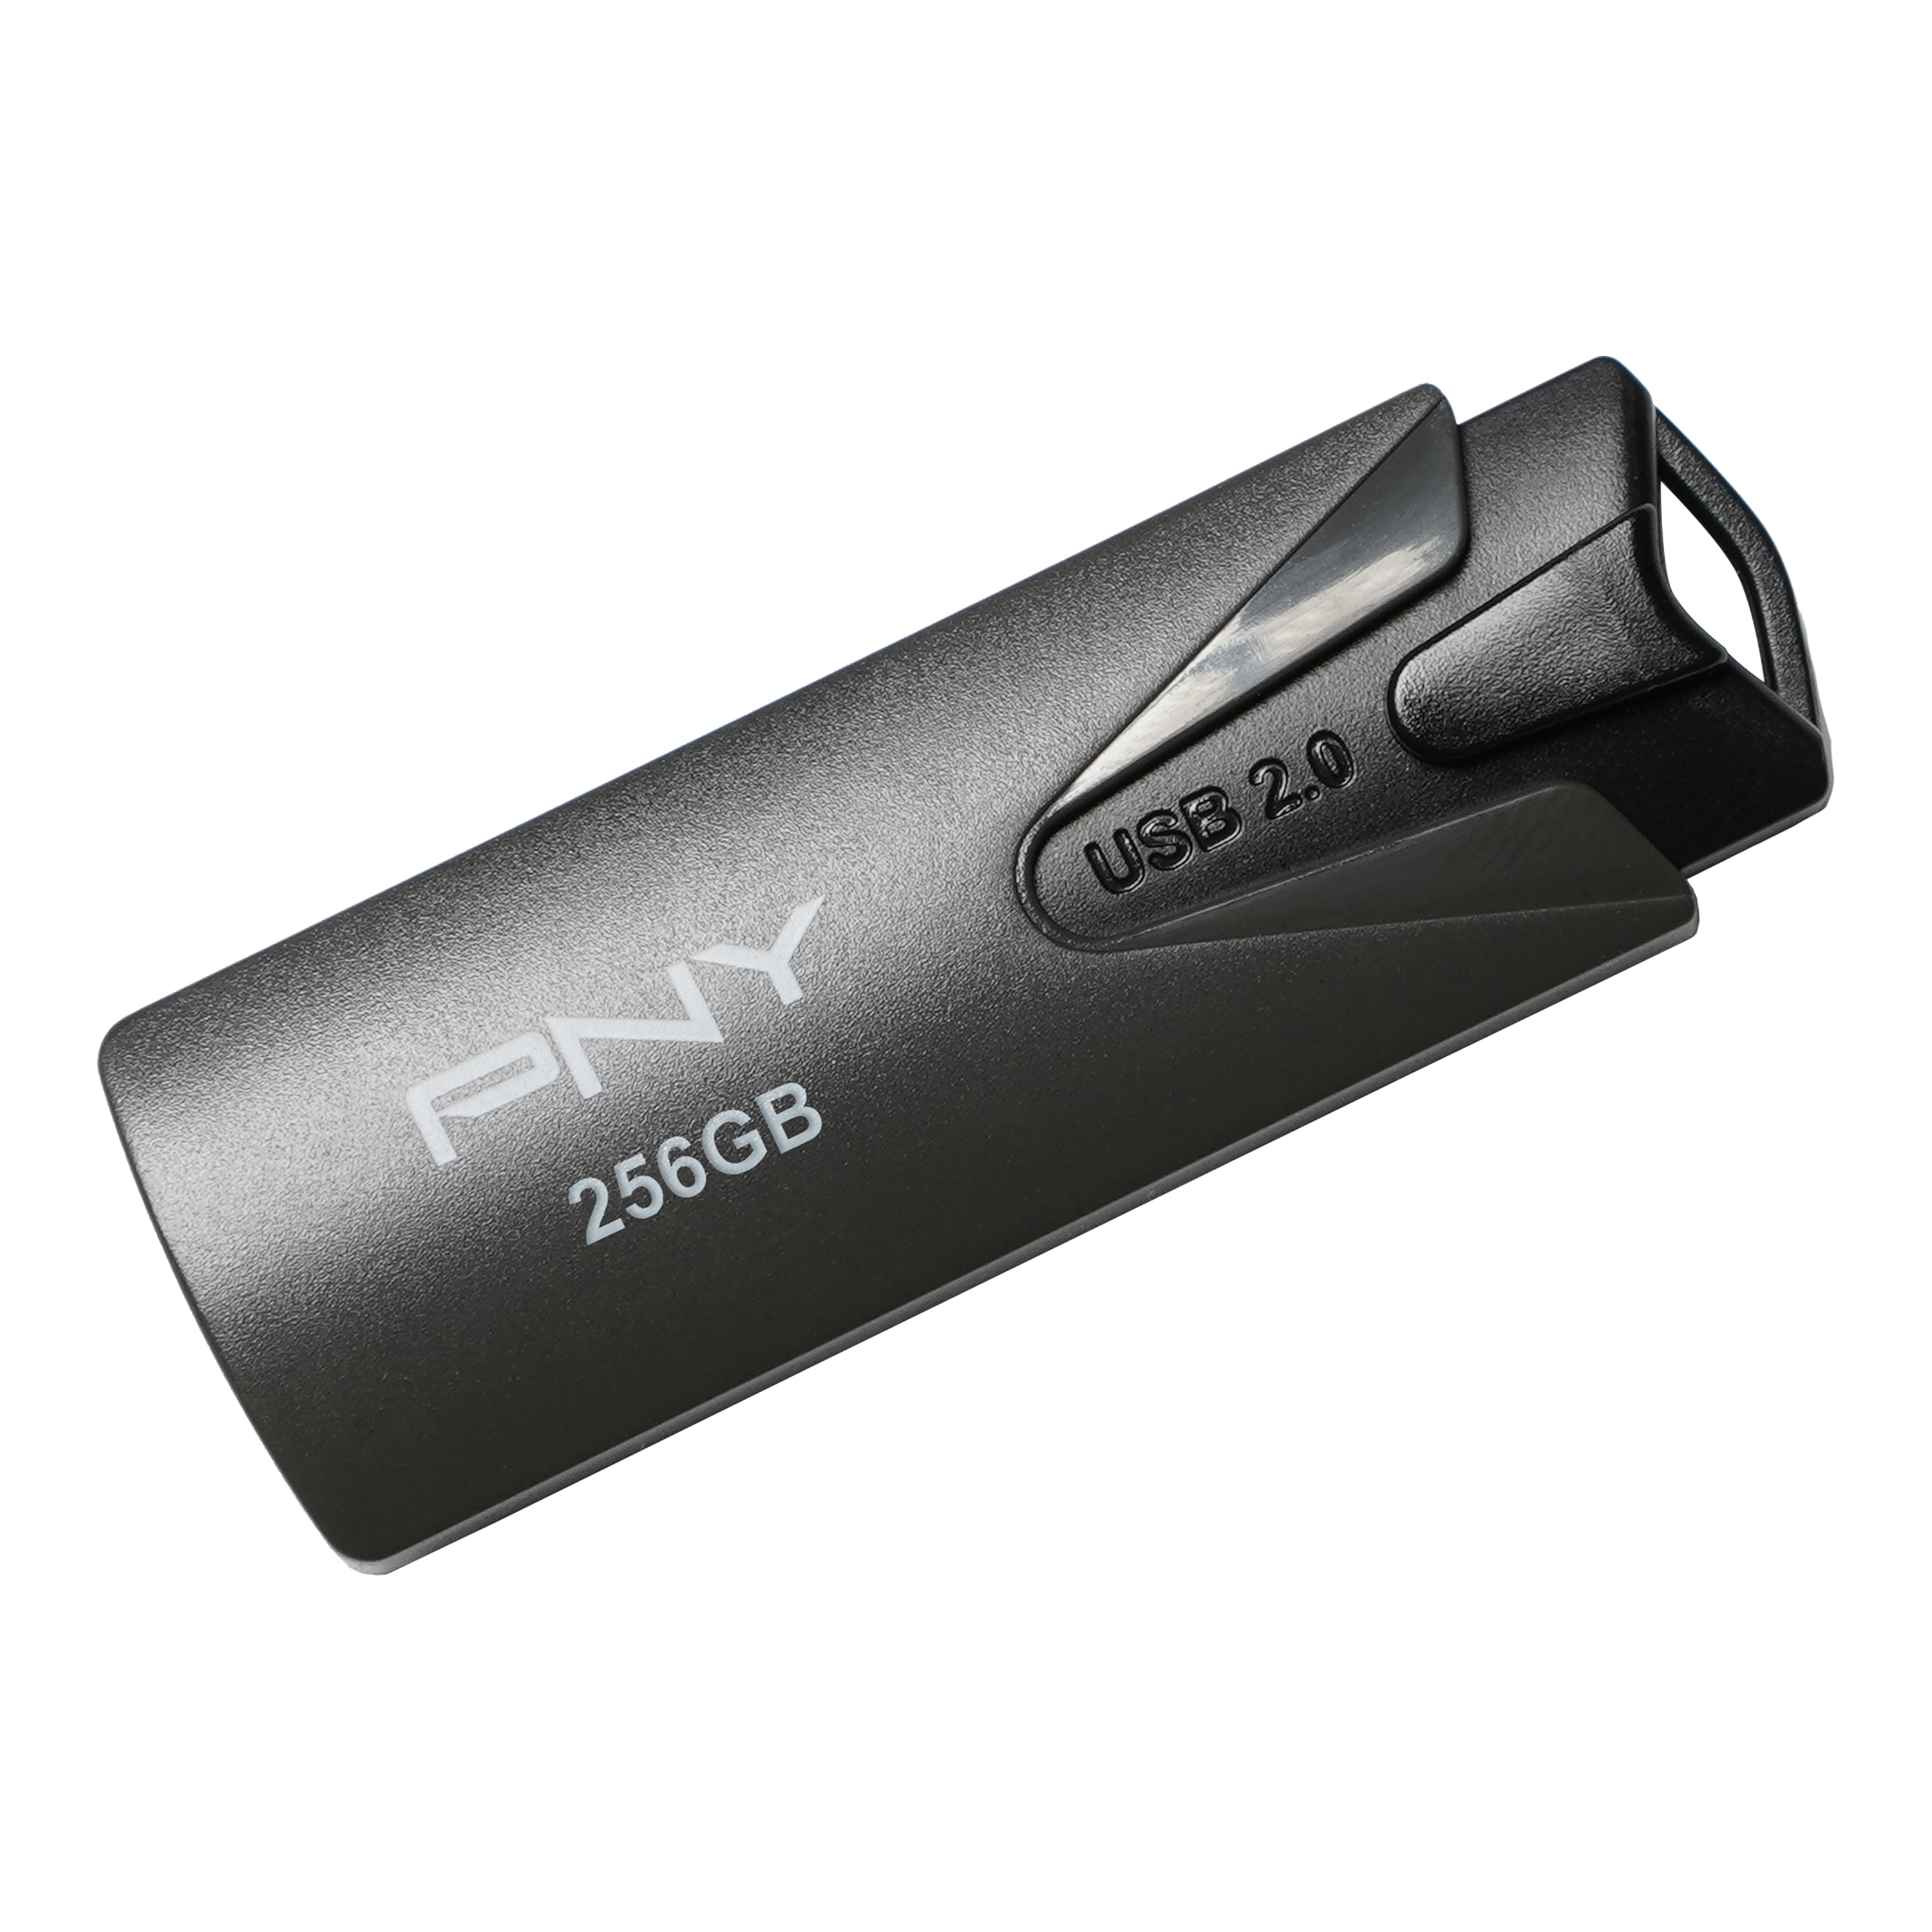 PNY 256GB Attache USB 2.0 Flash Drive - image 1 of 8